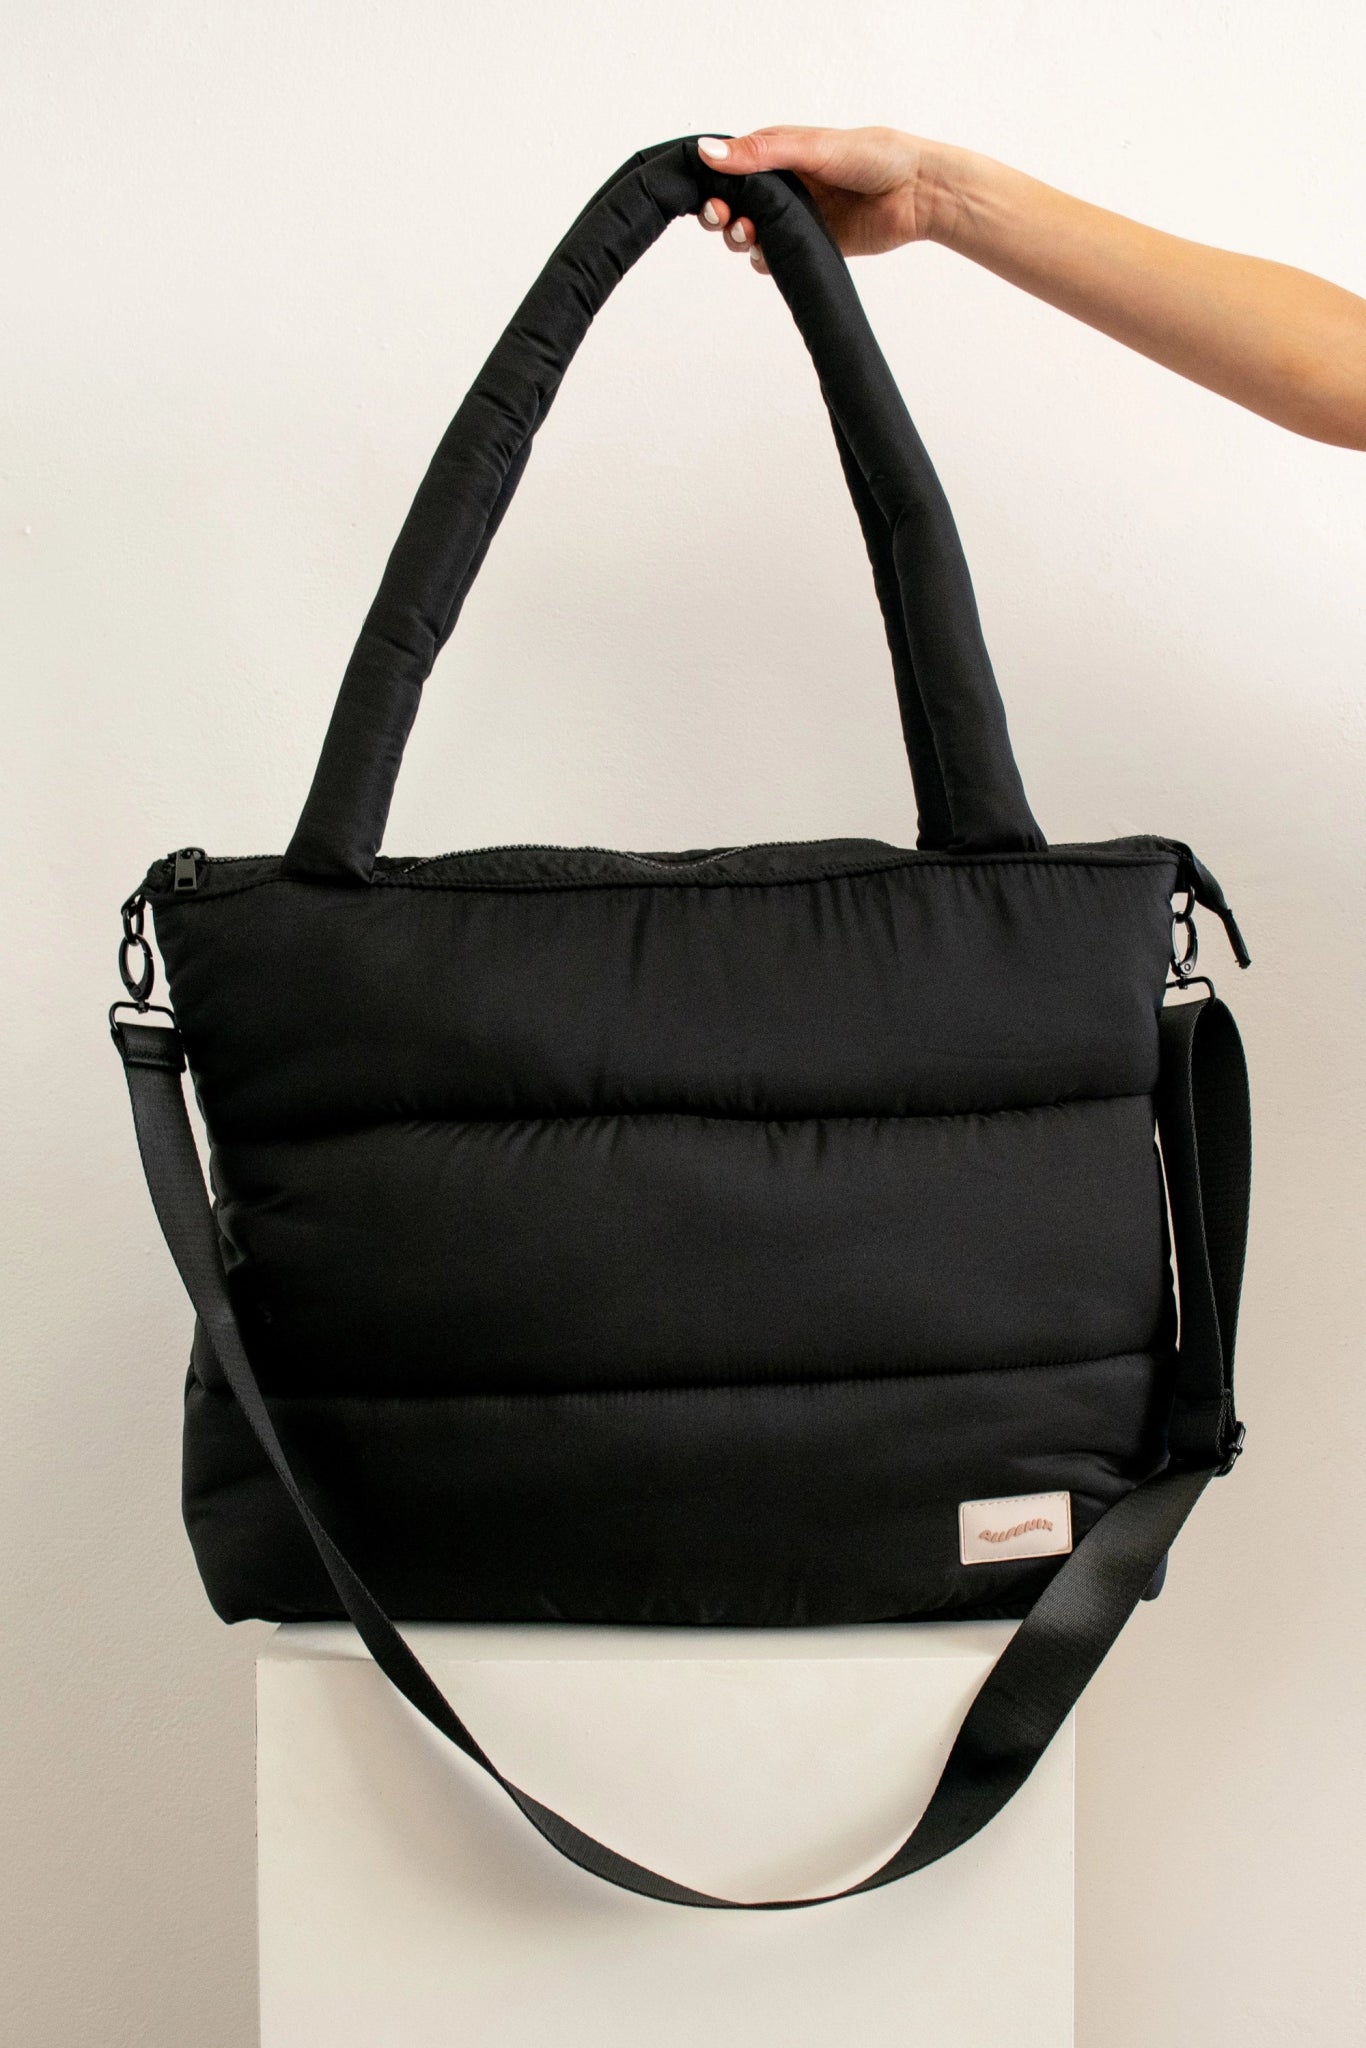 Puffer Bag (Black) - All Fenix